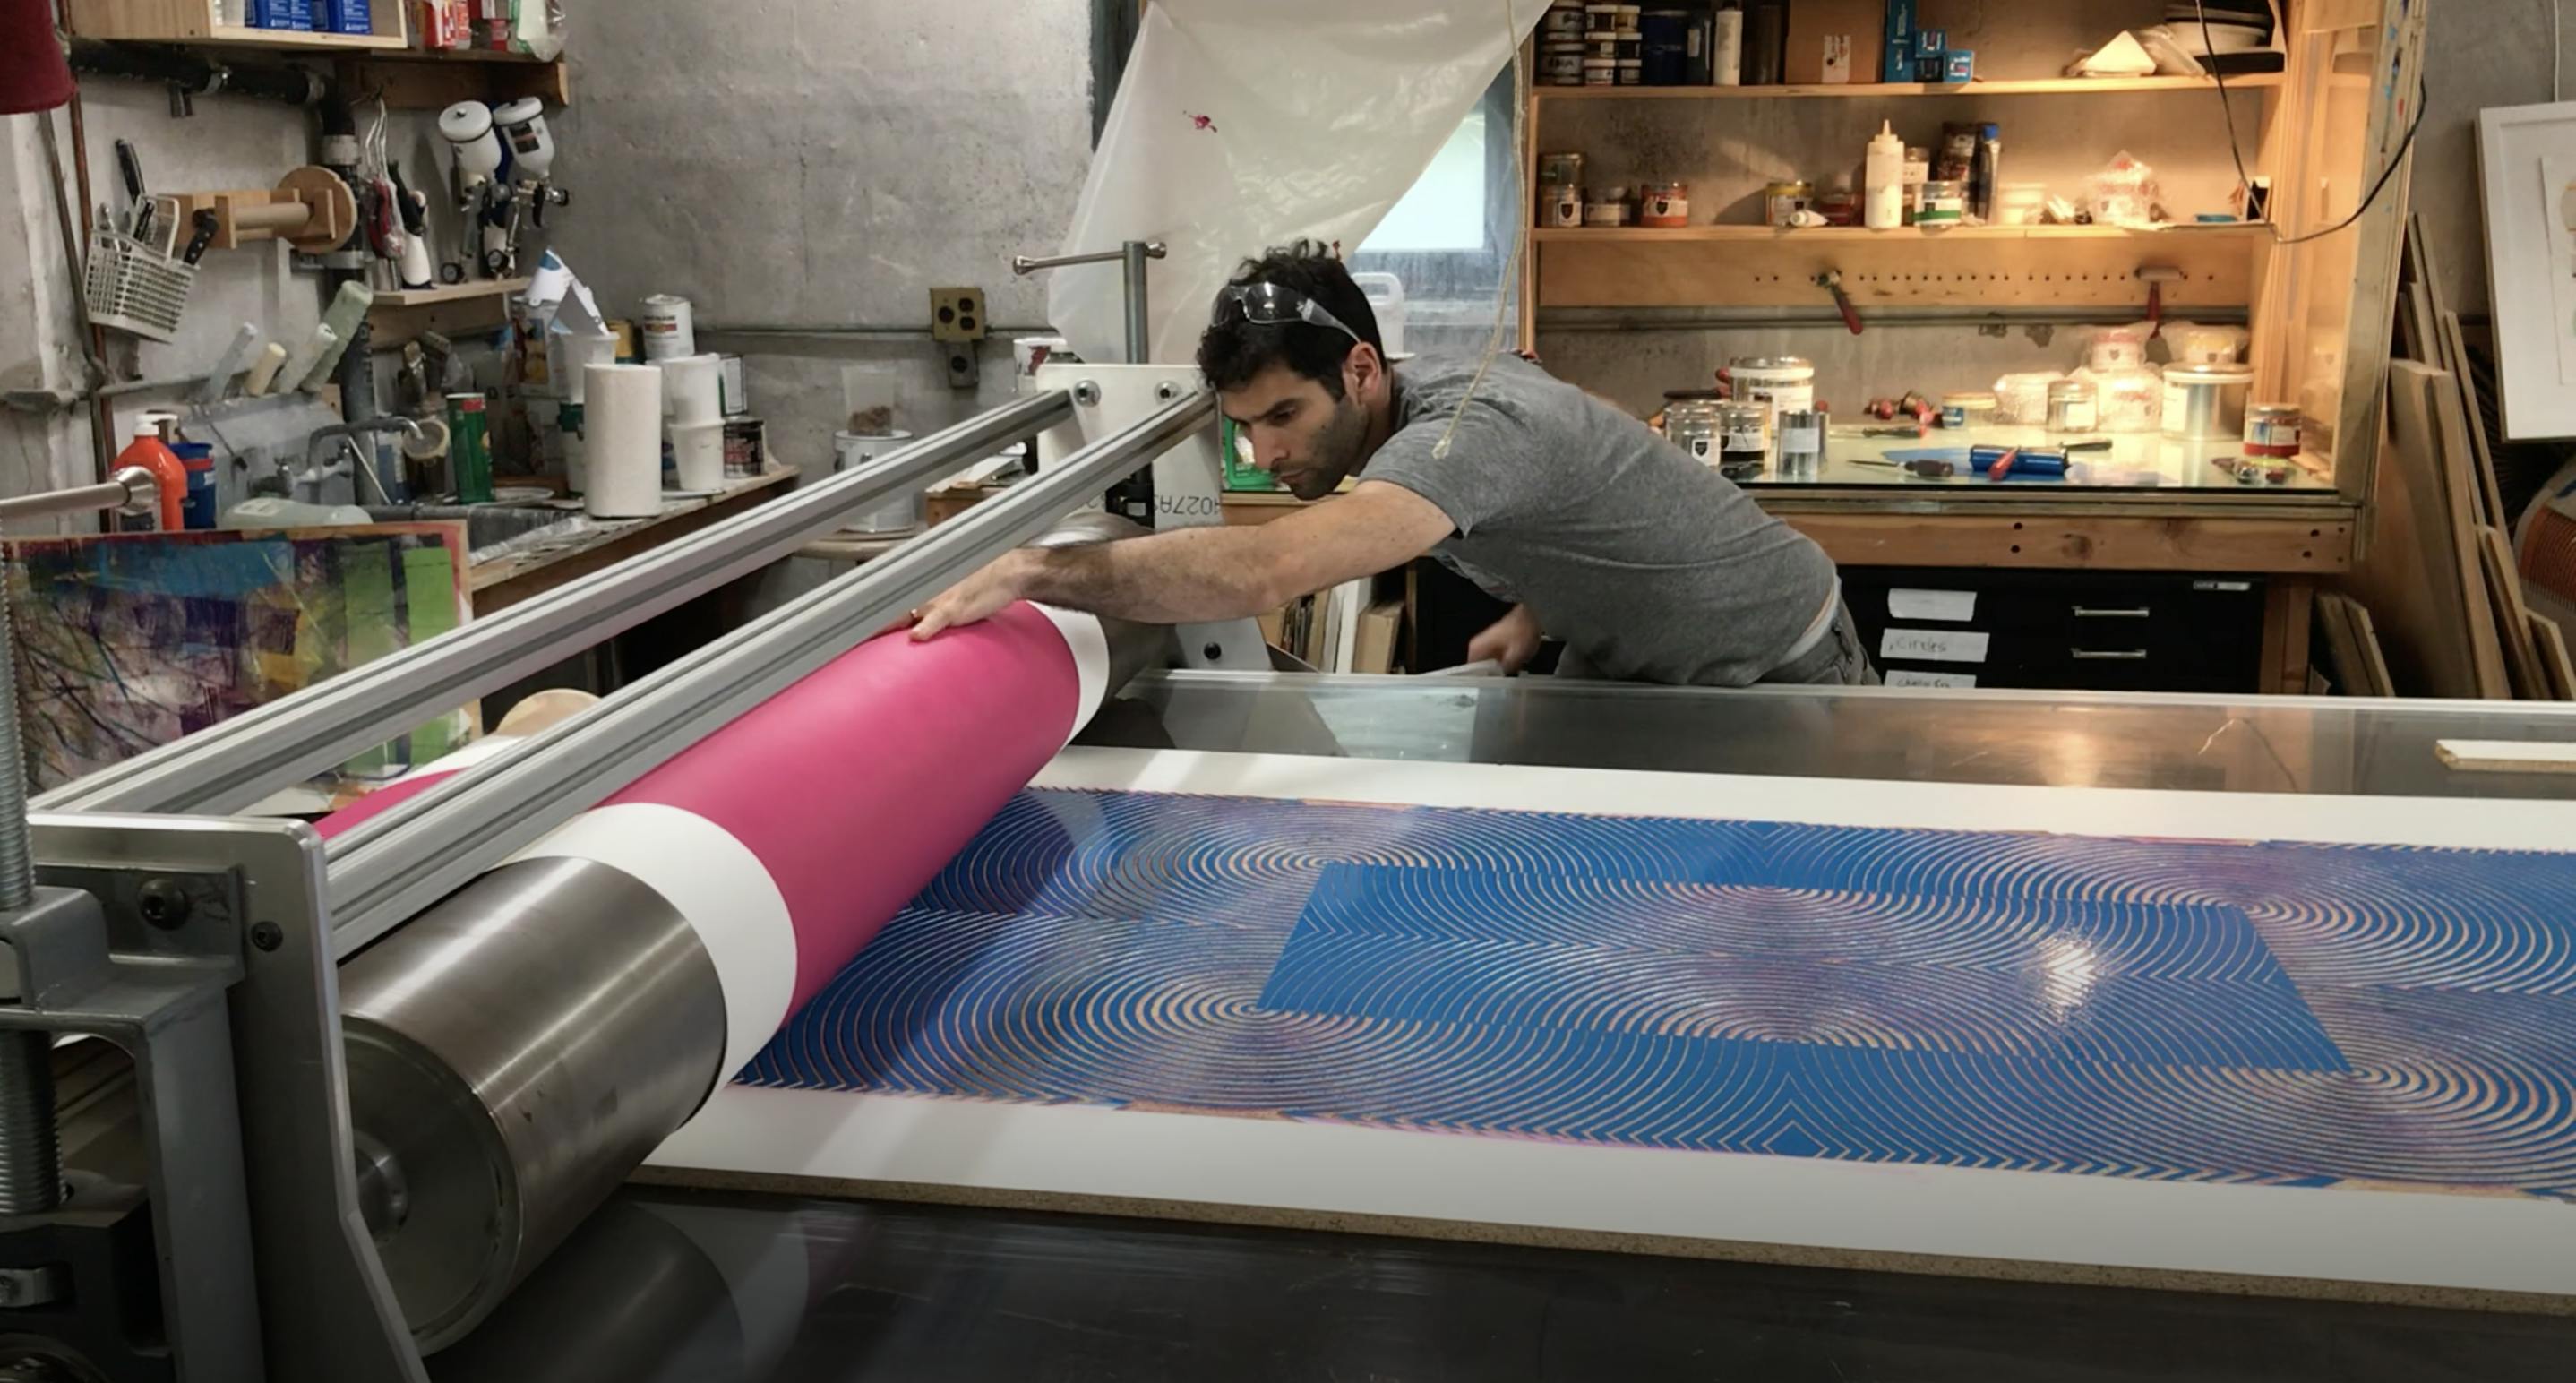 Artist Matt Neuman working on a large printing press in his studio.